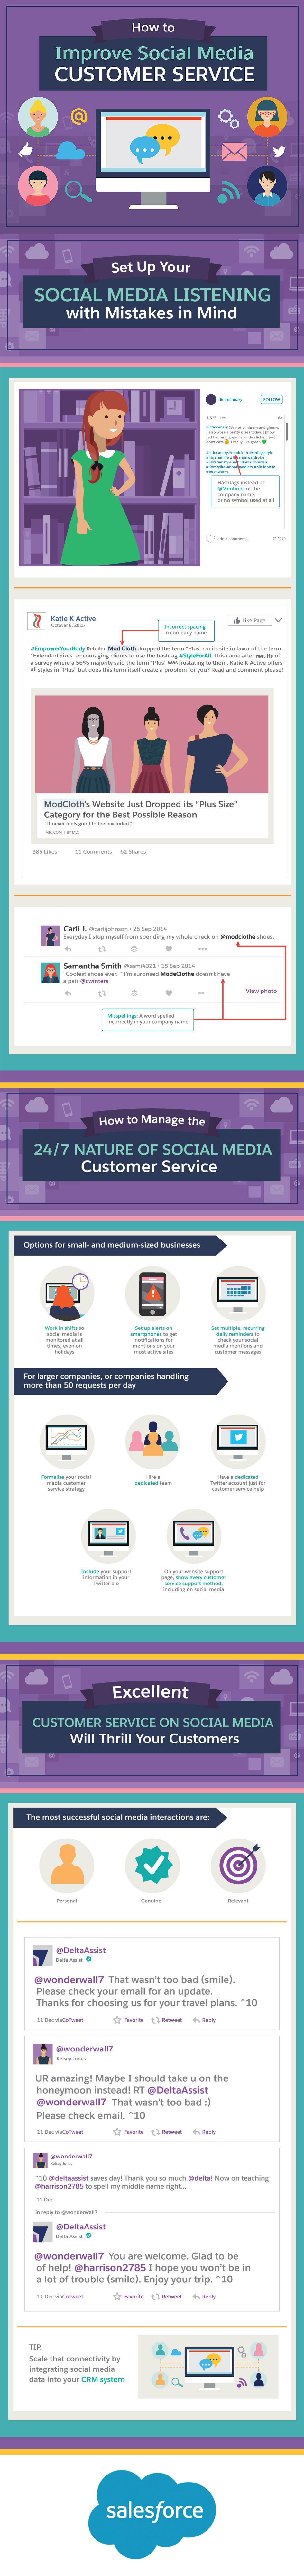 How to Improve Social Media Customer Service